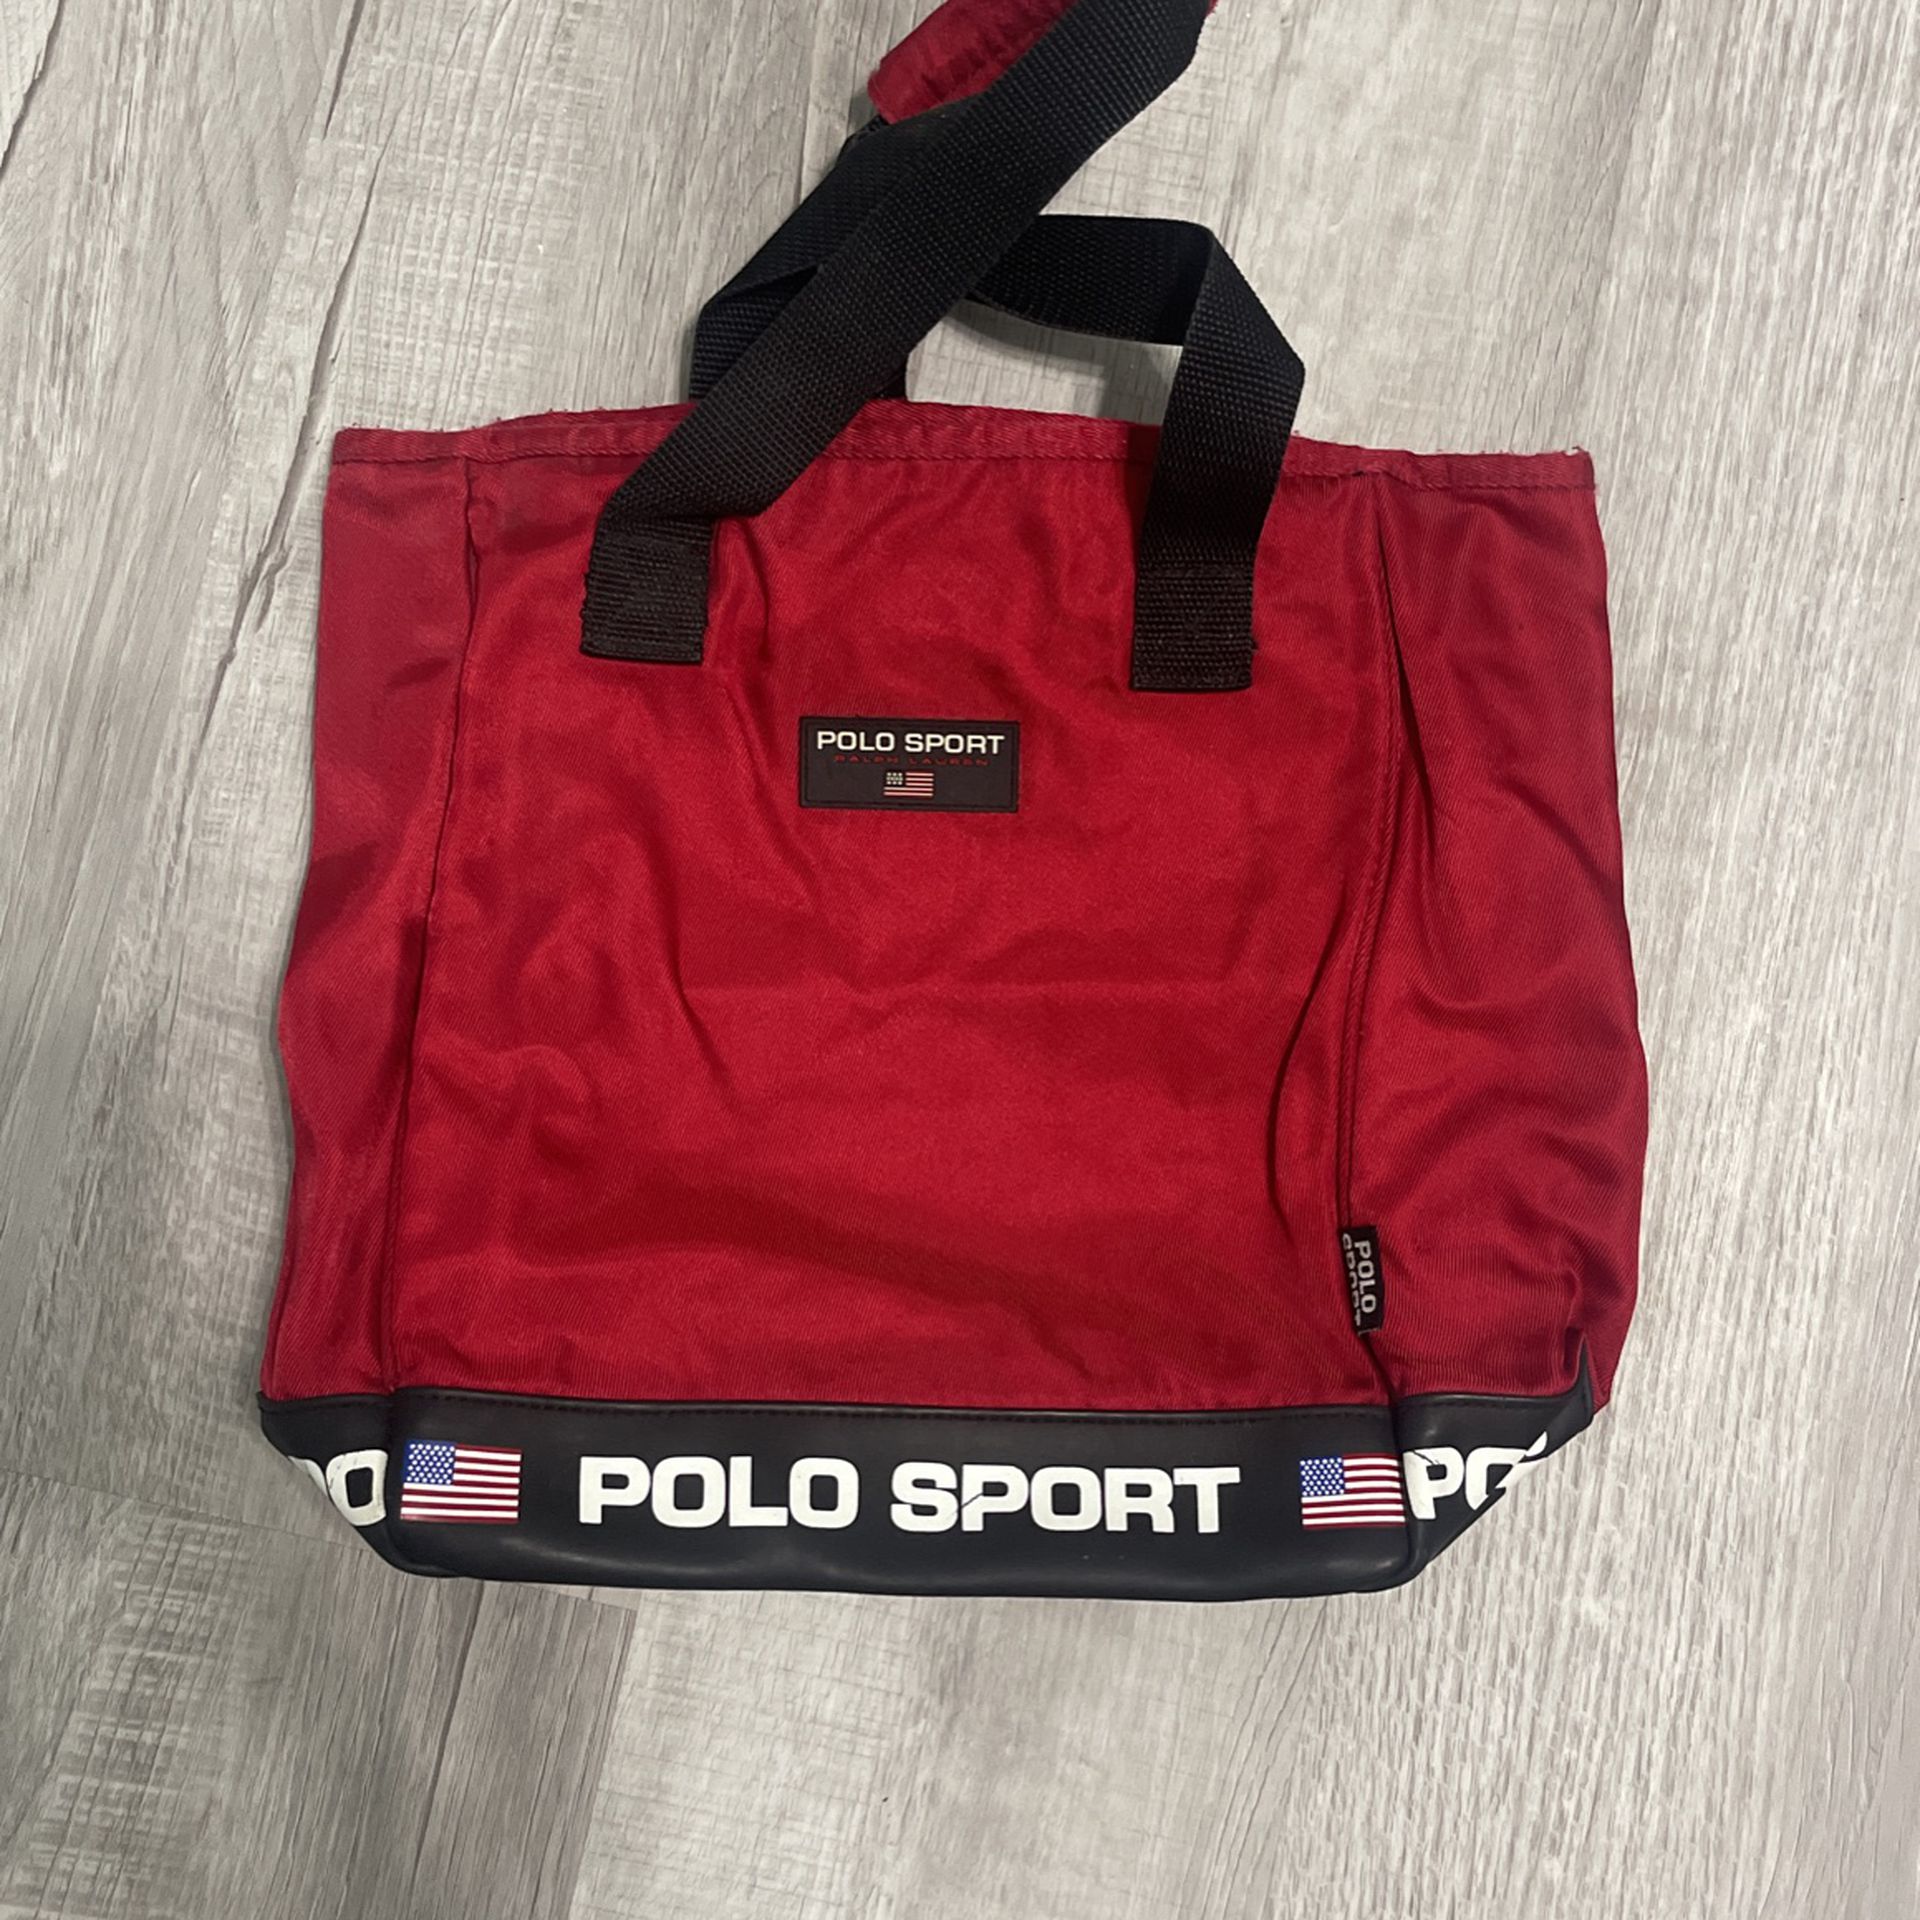 Polo Sport Tote Bag